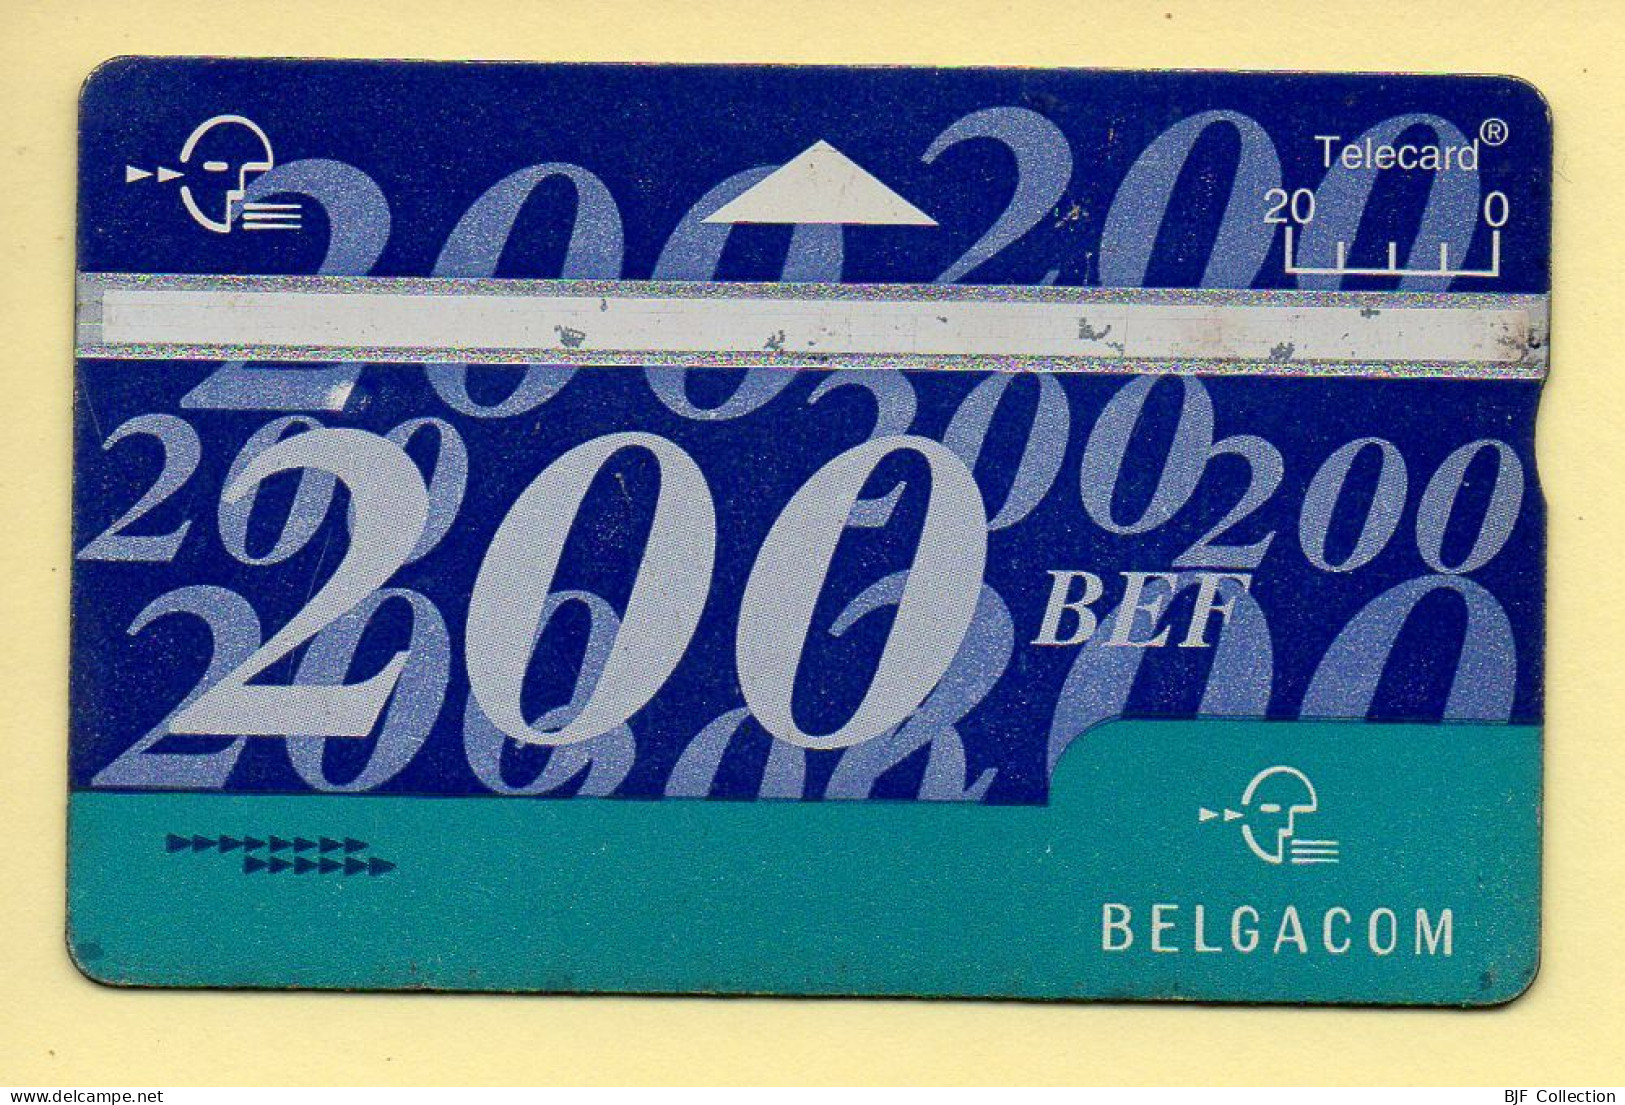 Télécarte : Belgique : BELGACOM / 200 BEF - Senza Chip